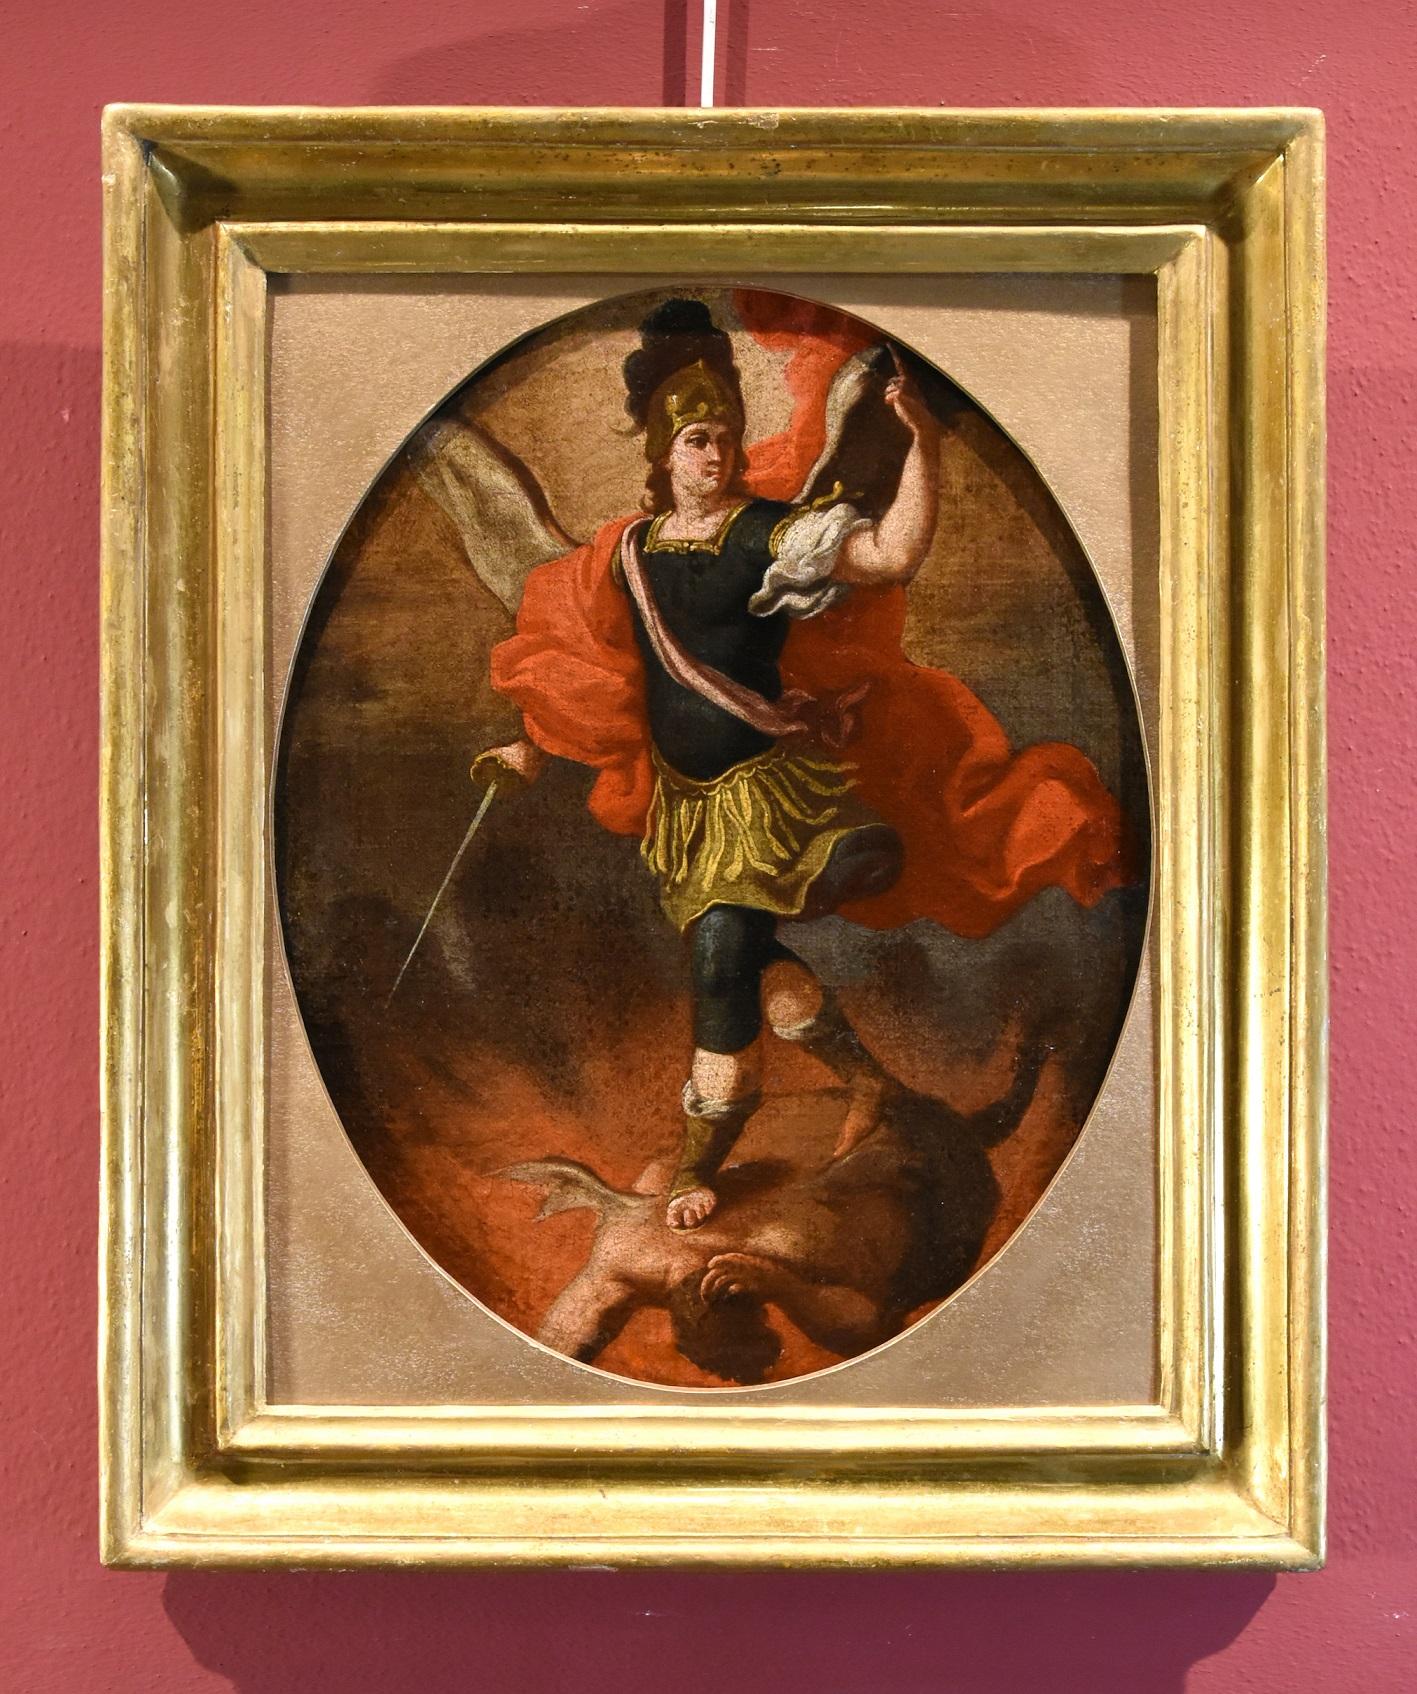 Saint Michael Archangel Devil Lama Paint Oil on canvas 17/18th Century Italy - Painting by Giovan Battista Lama (Naples, 1673 - 1748)